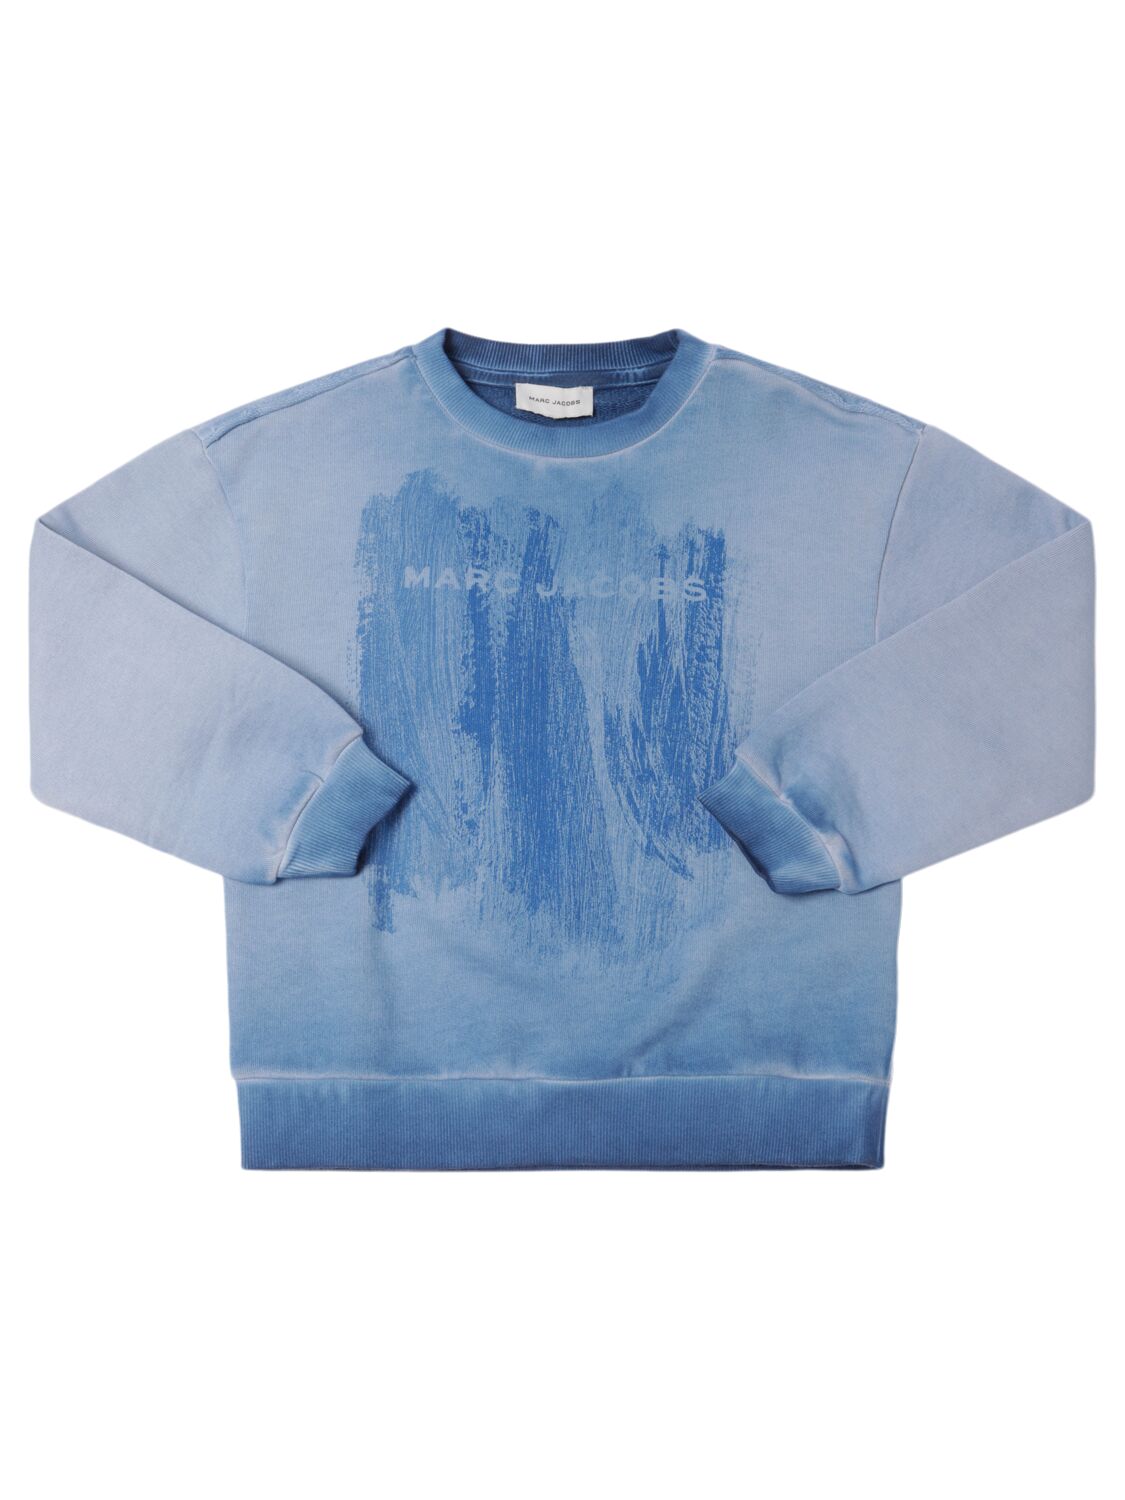 Marc Jacobs Cotton Crewneck Sweatshirt W/logo In Blue